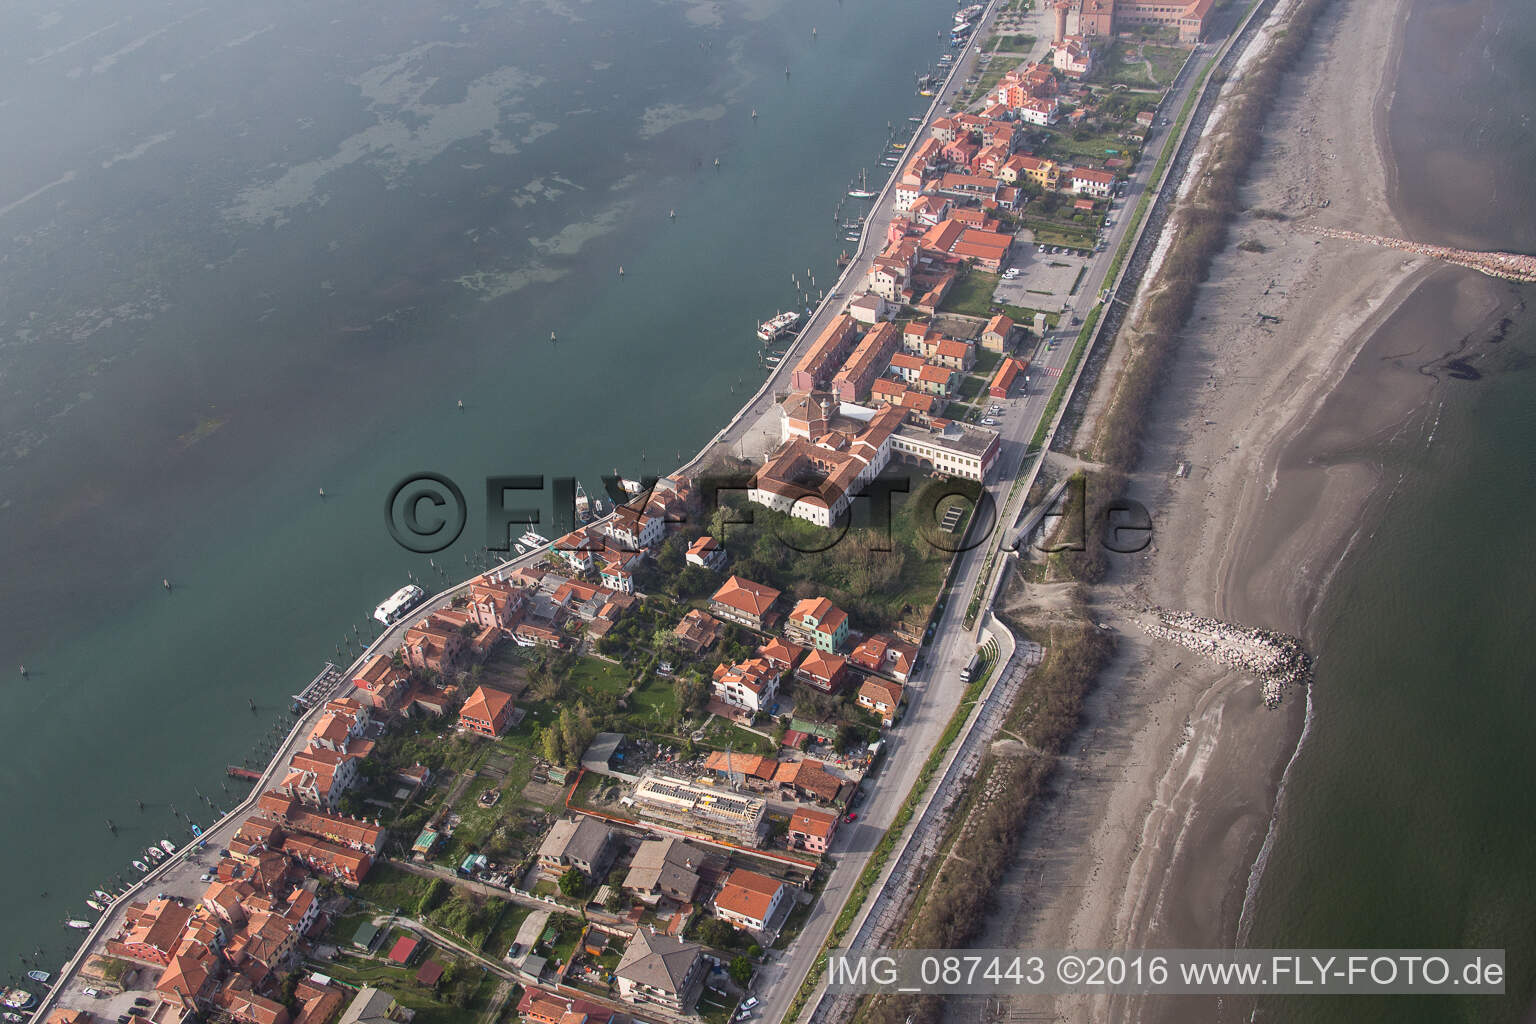 Drone image of Settlement area in the district Pellestrina in Venedig in Venetien, Italy